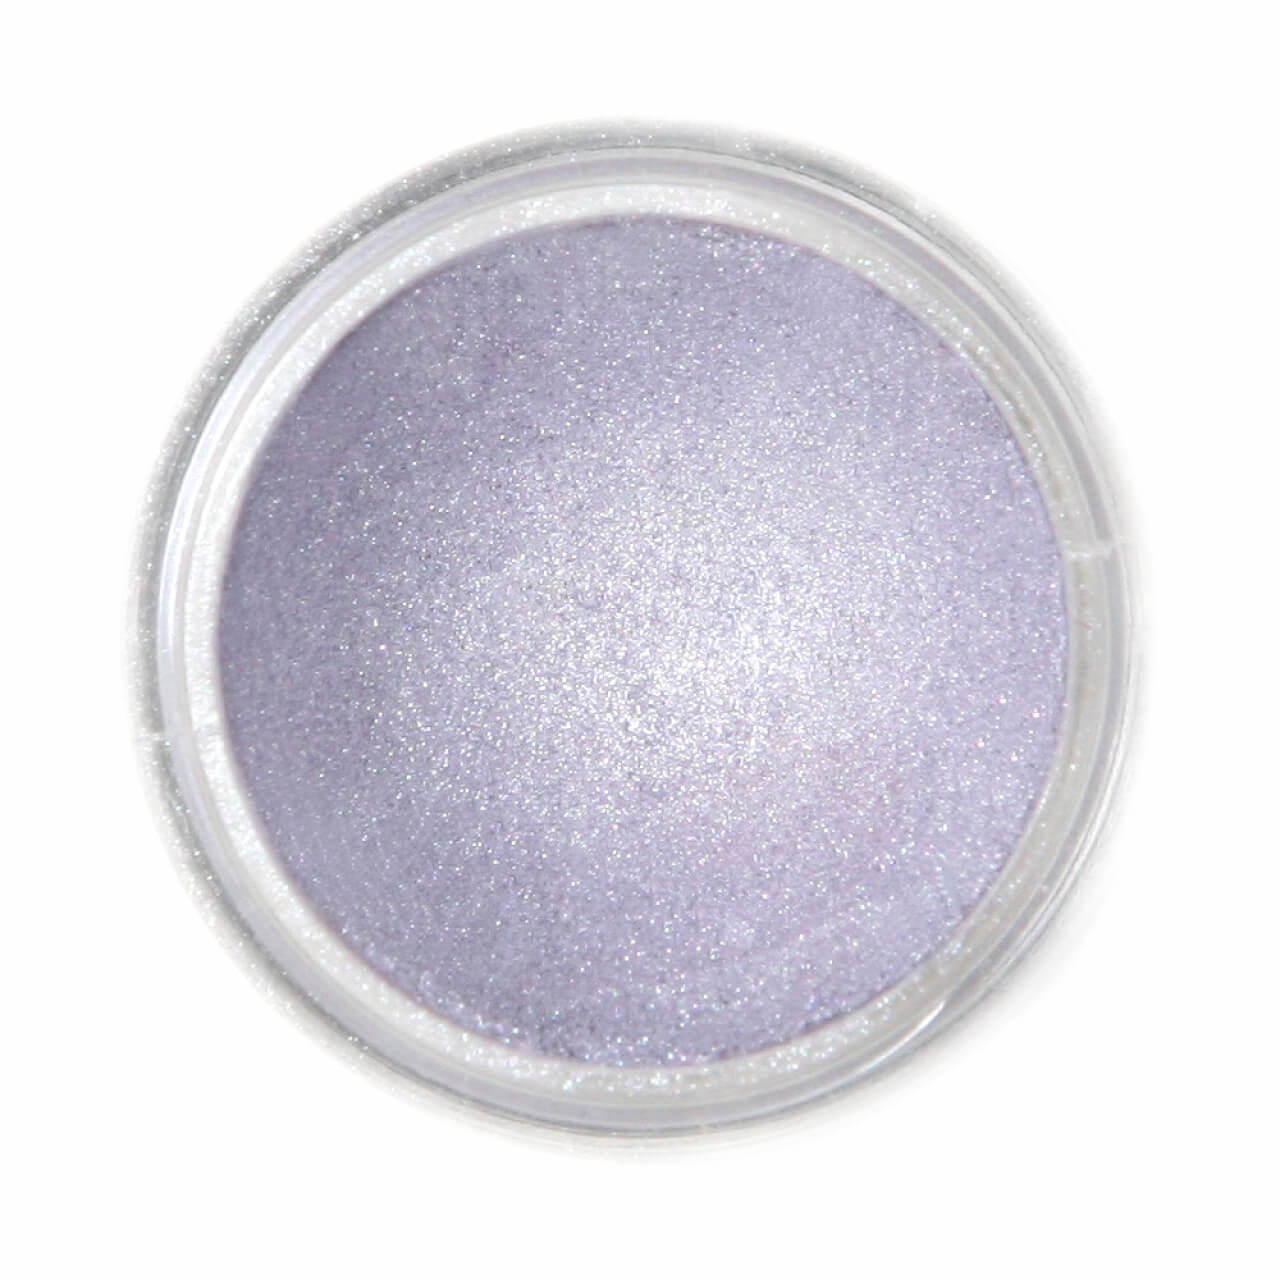 FRACTAL - Shimmering Ételdekorációs Selyempor - Holdfény Lila ( Moonlight Lilac ) - 2,5g